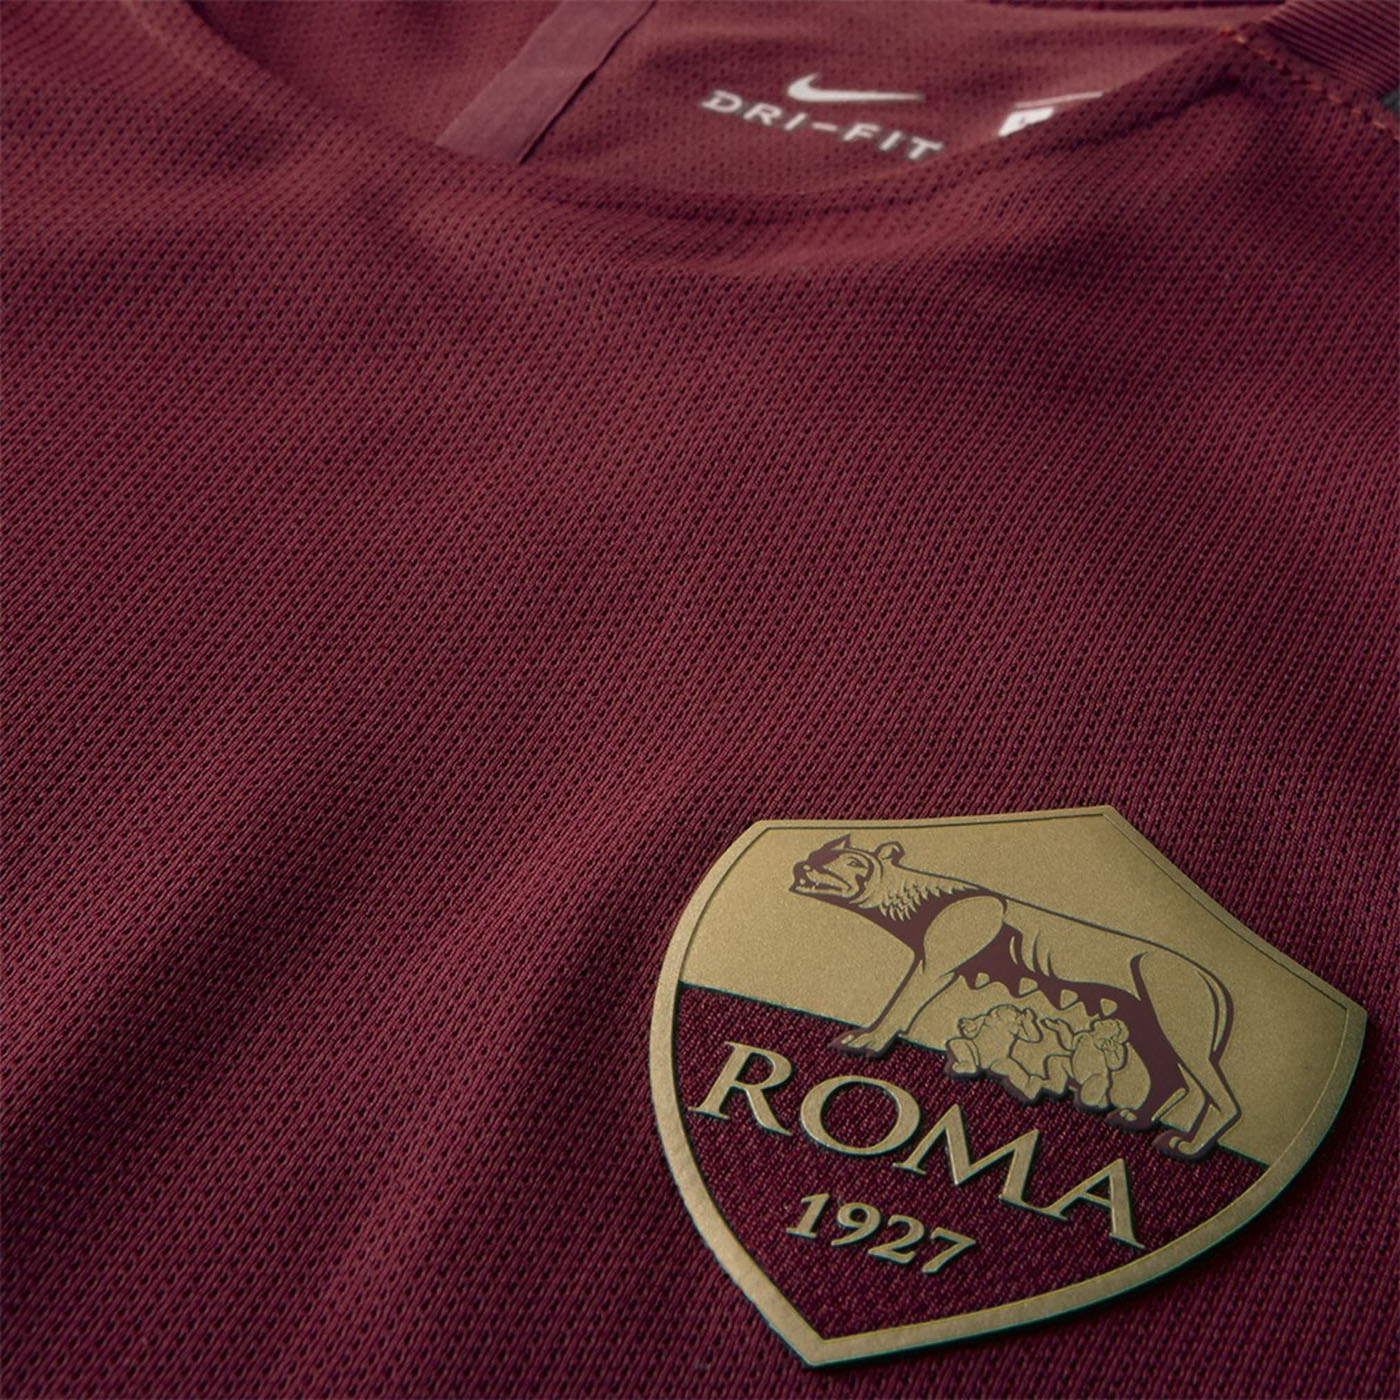 as roma roma lupa capitoline wolf lupa capitolina football soccer worldwide crest shield fans Rome Italy italia forza roma